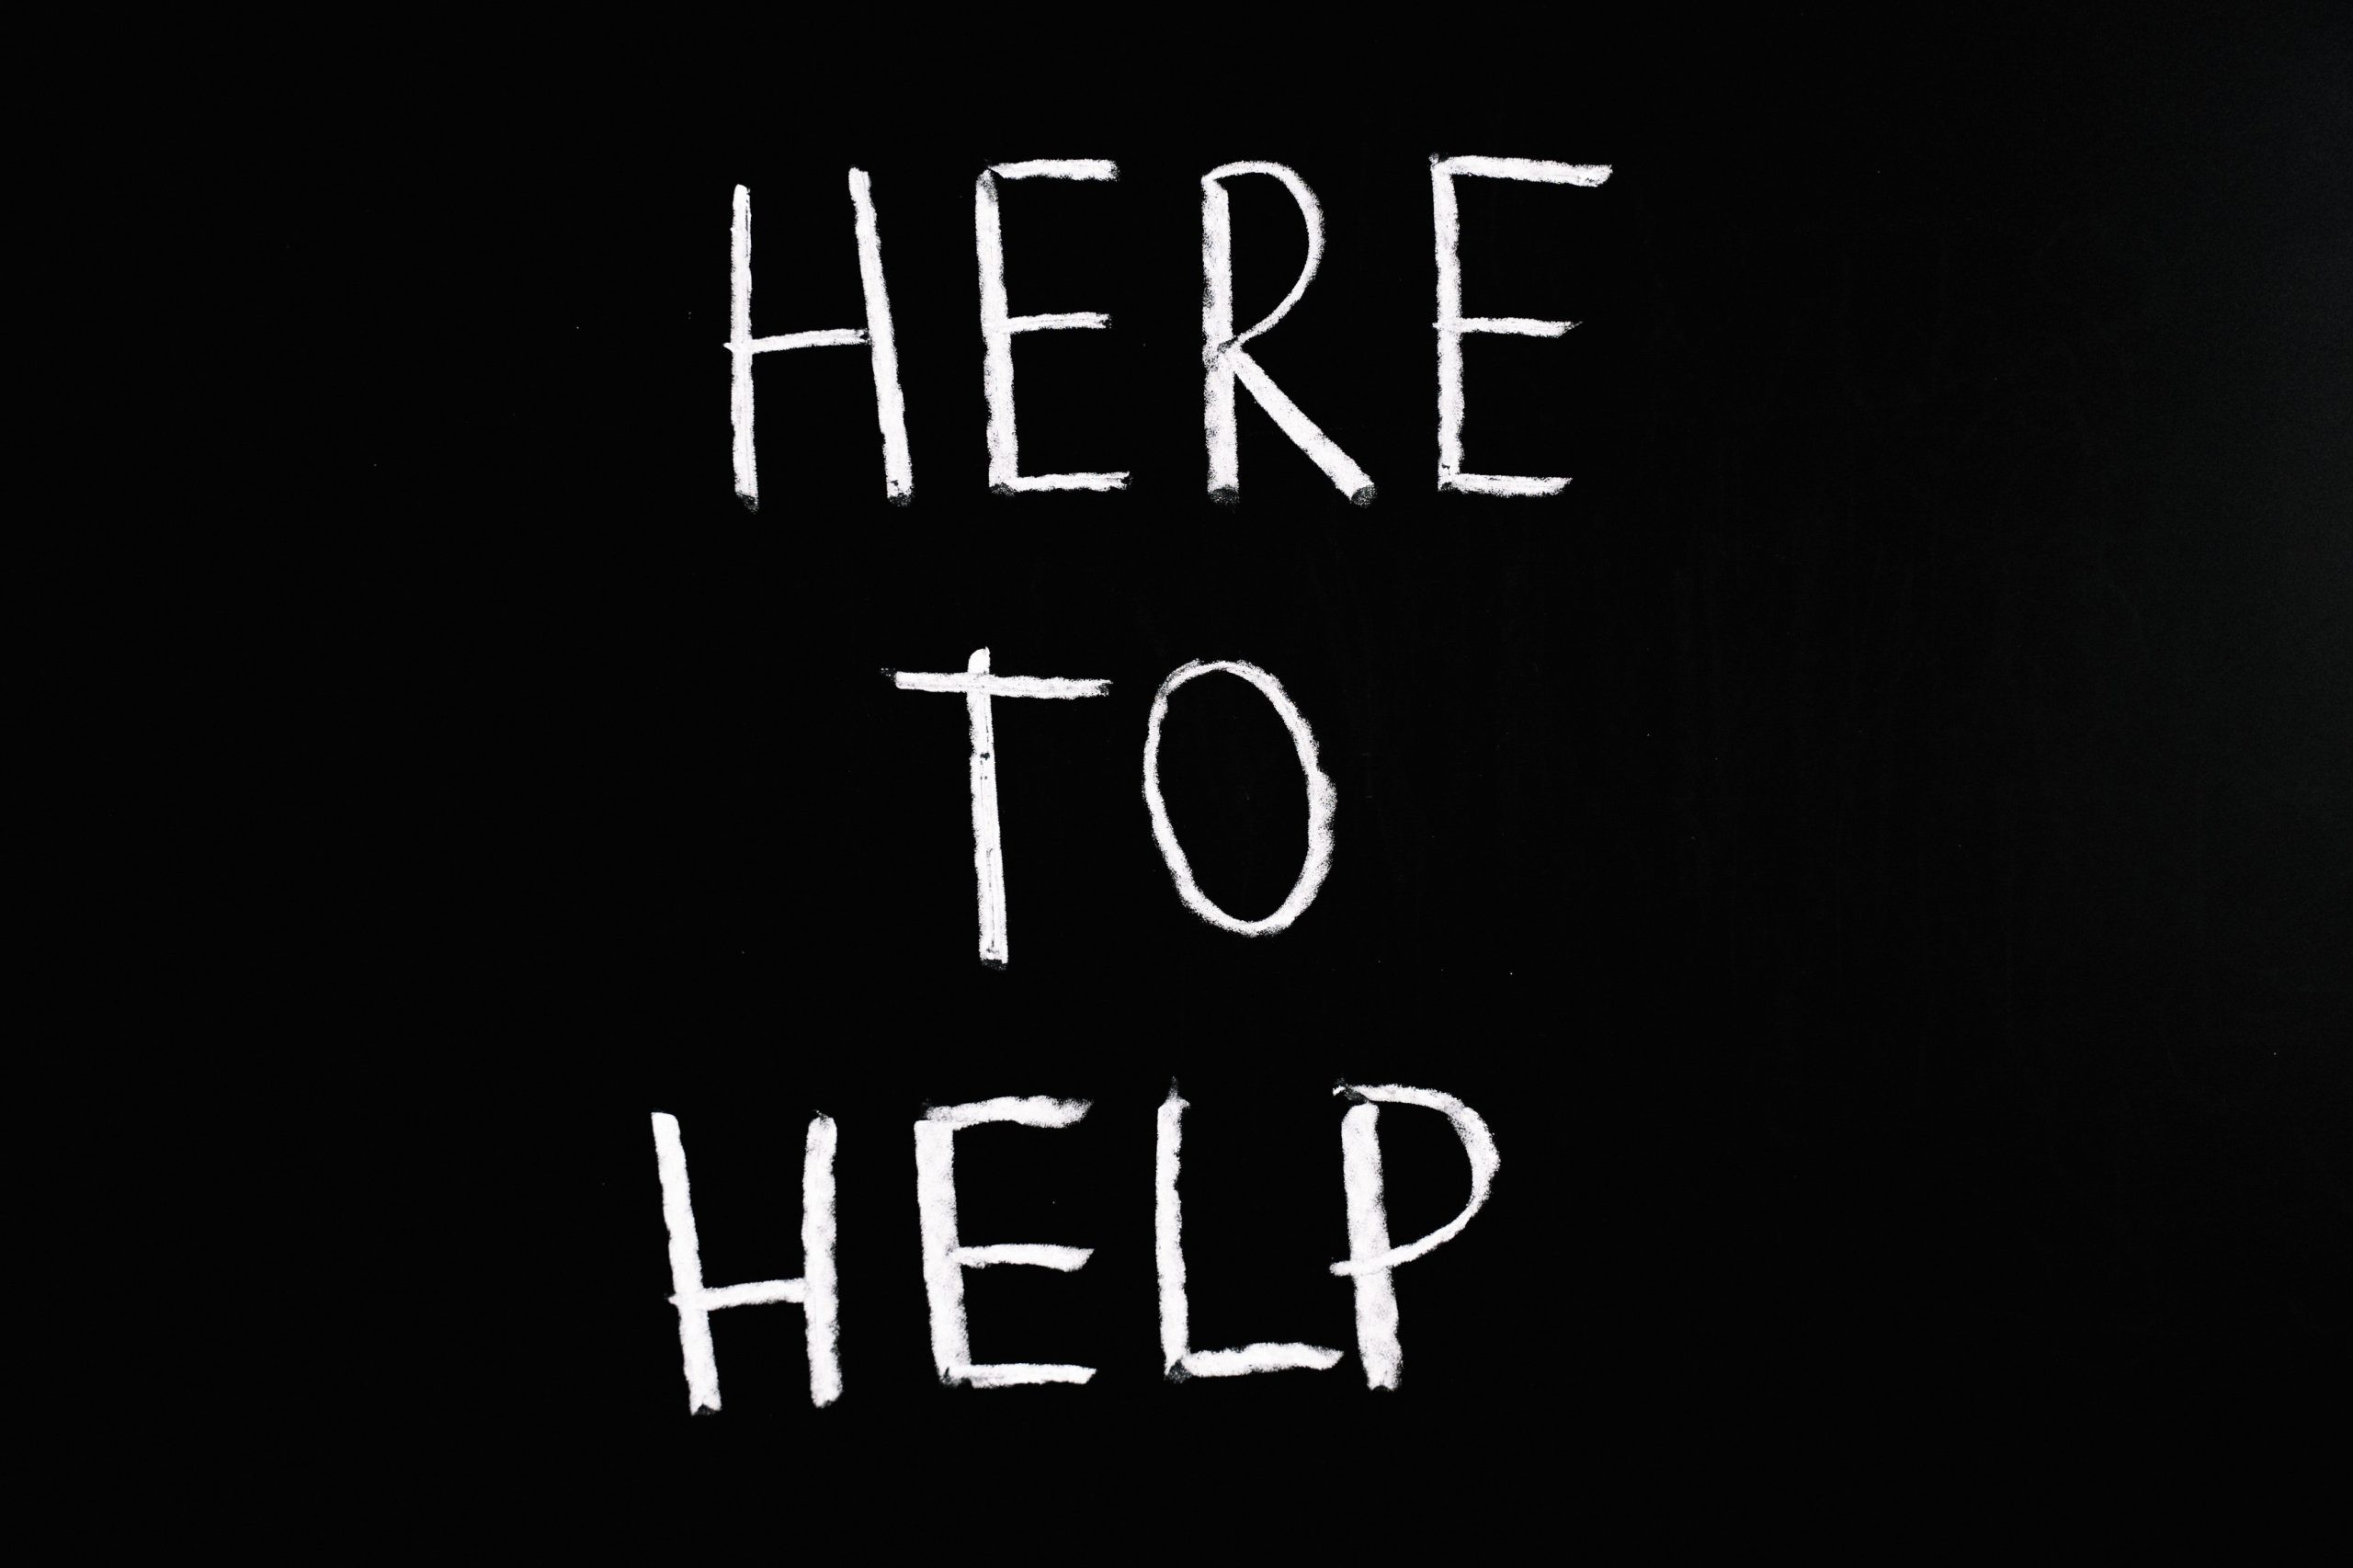 "here to help" written in chalk